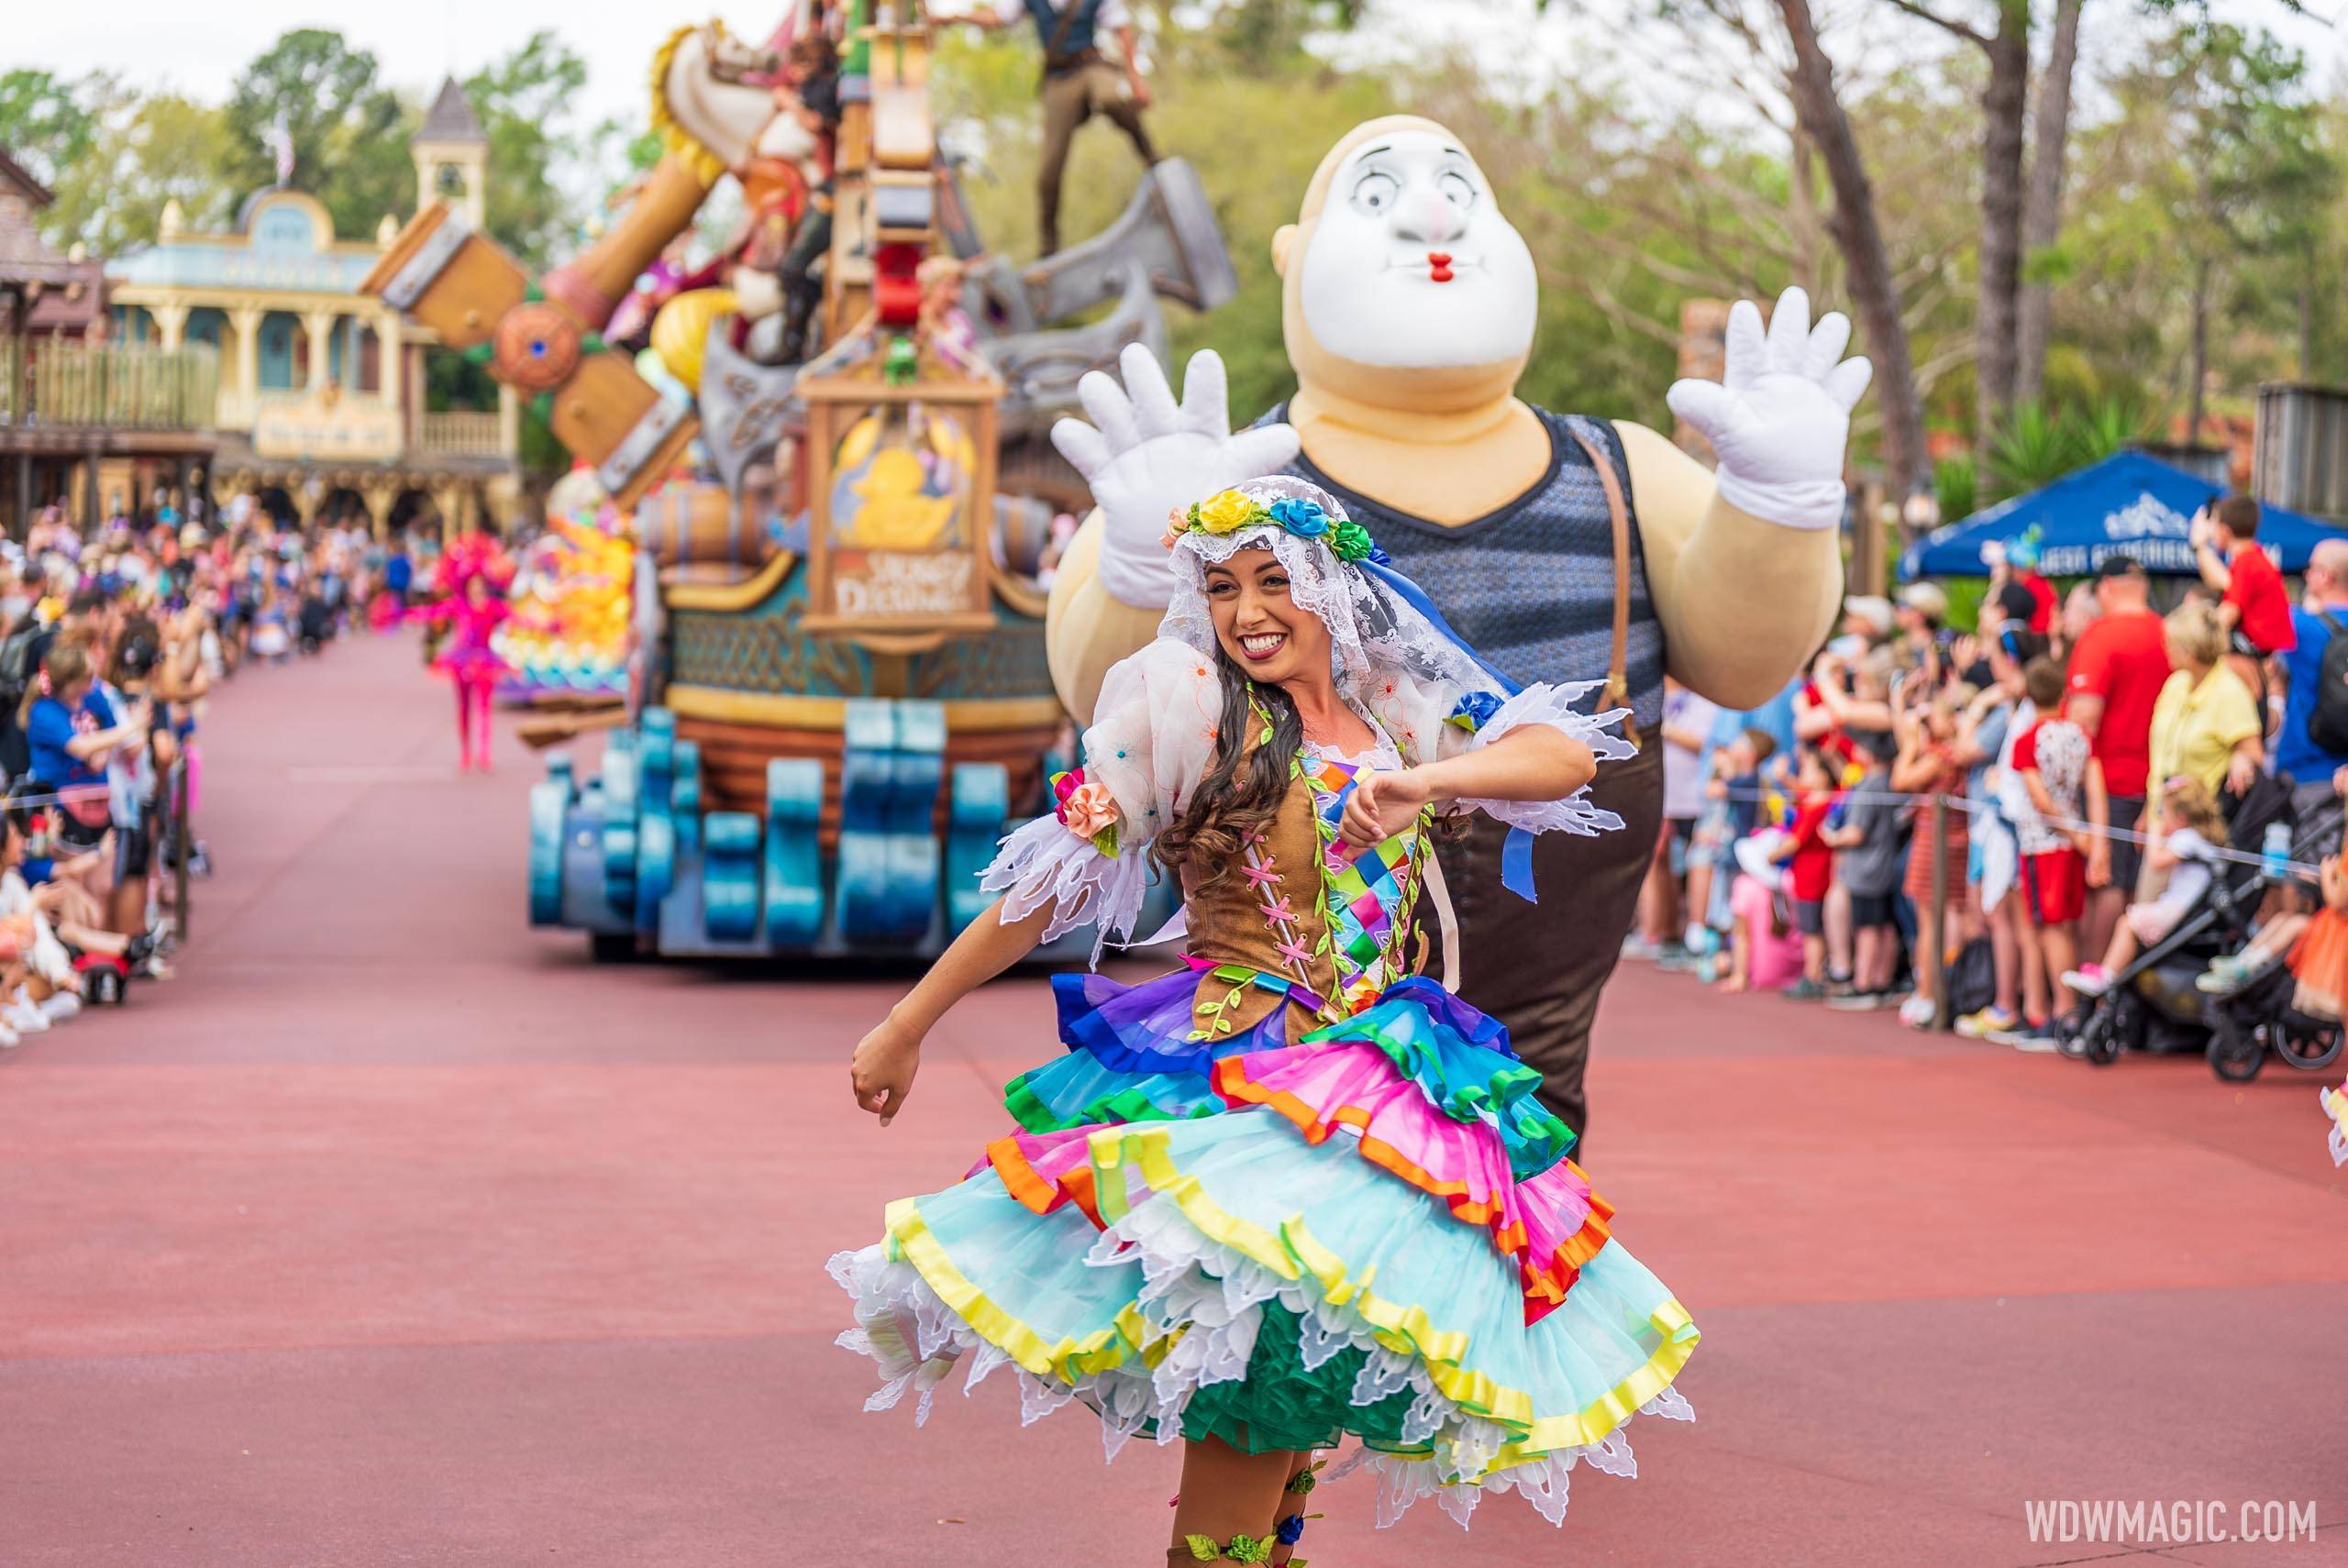 Disney Festival of Fantasy Parade returns March 9 2022